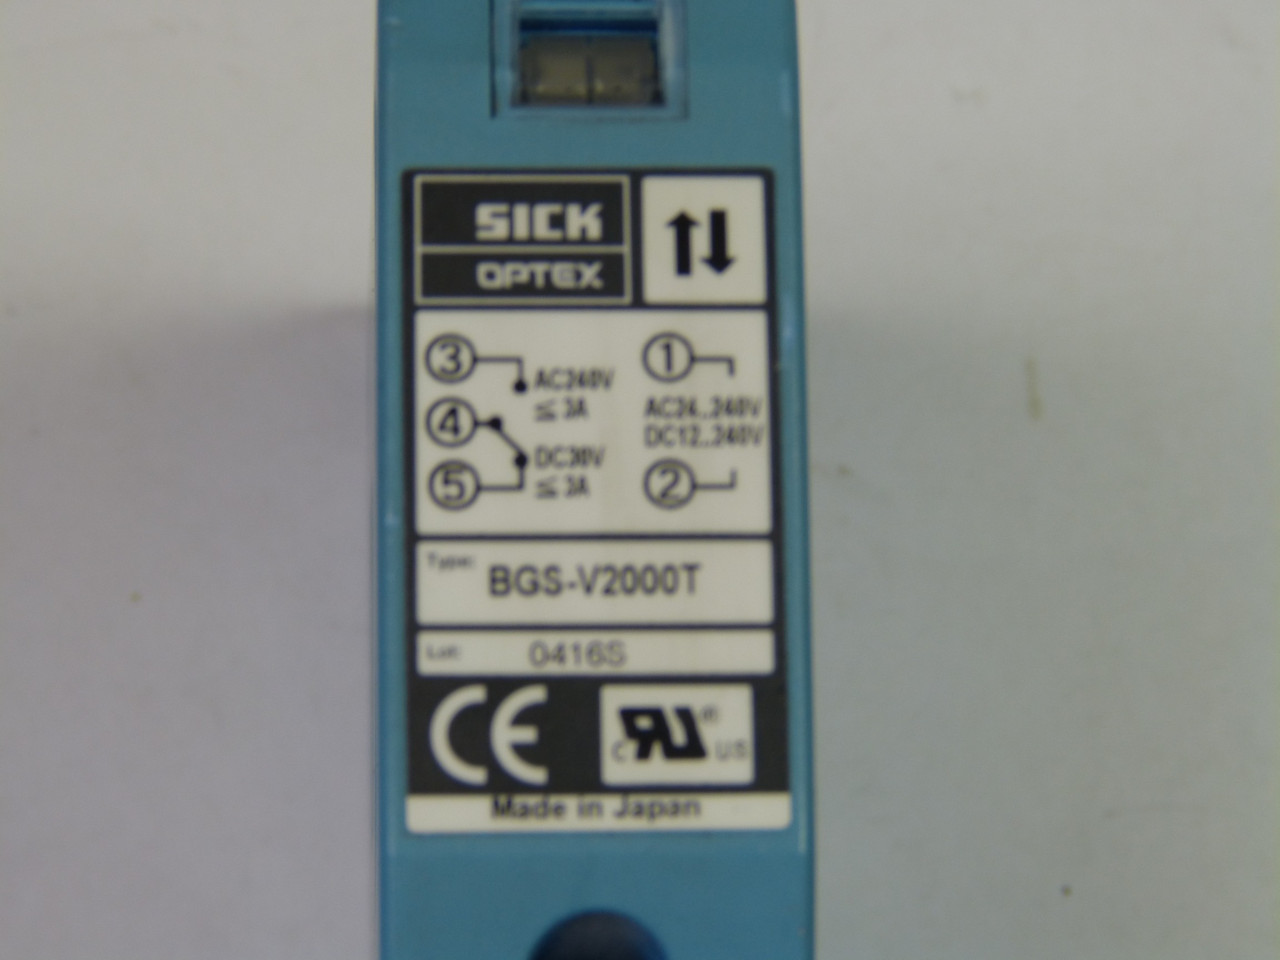 Sick BGS-V2000T Photoelectric Sensor Ac/Dc 0.5-2 Meter USED